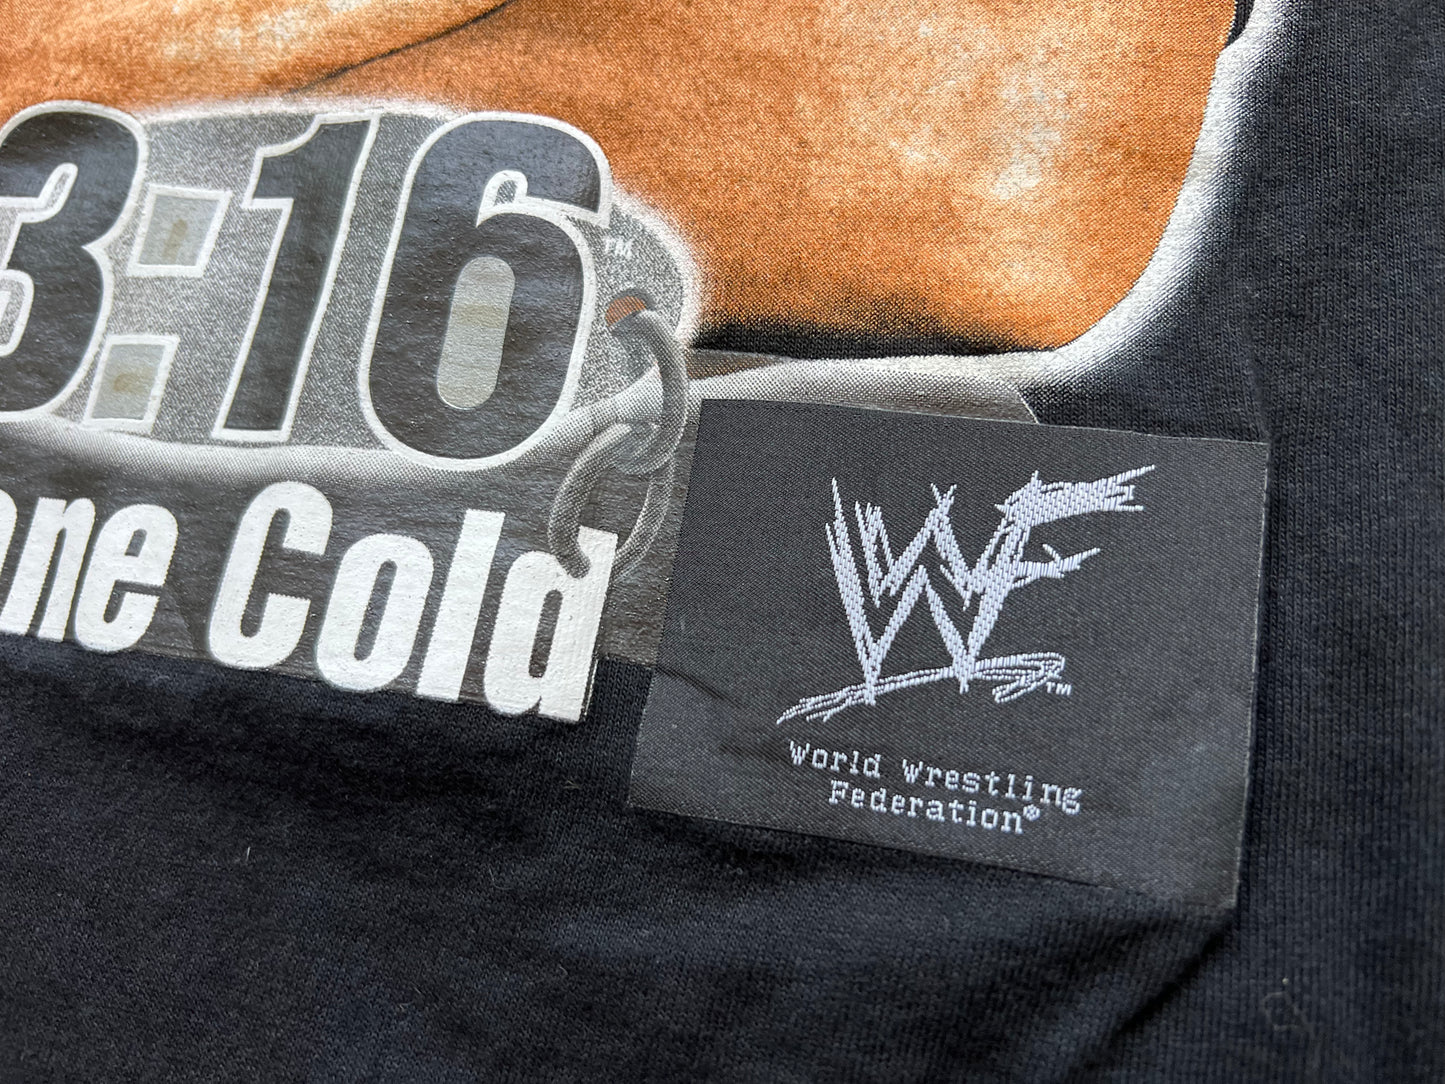 1998 WWF “Stone Cold” Steve Austin shirt